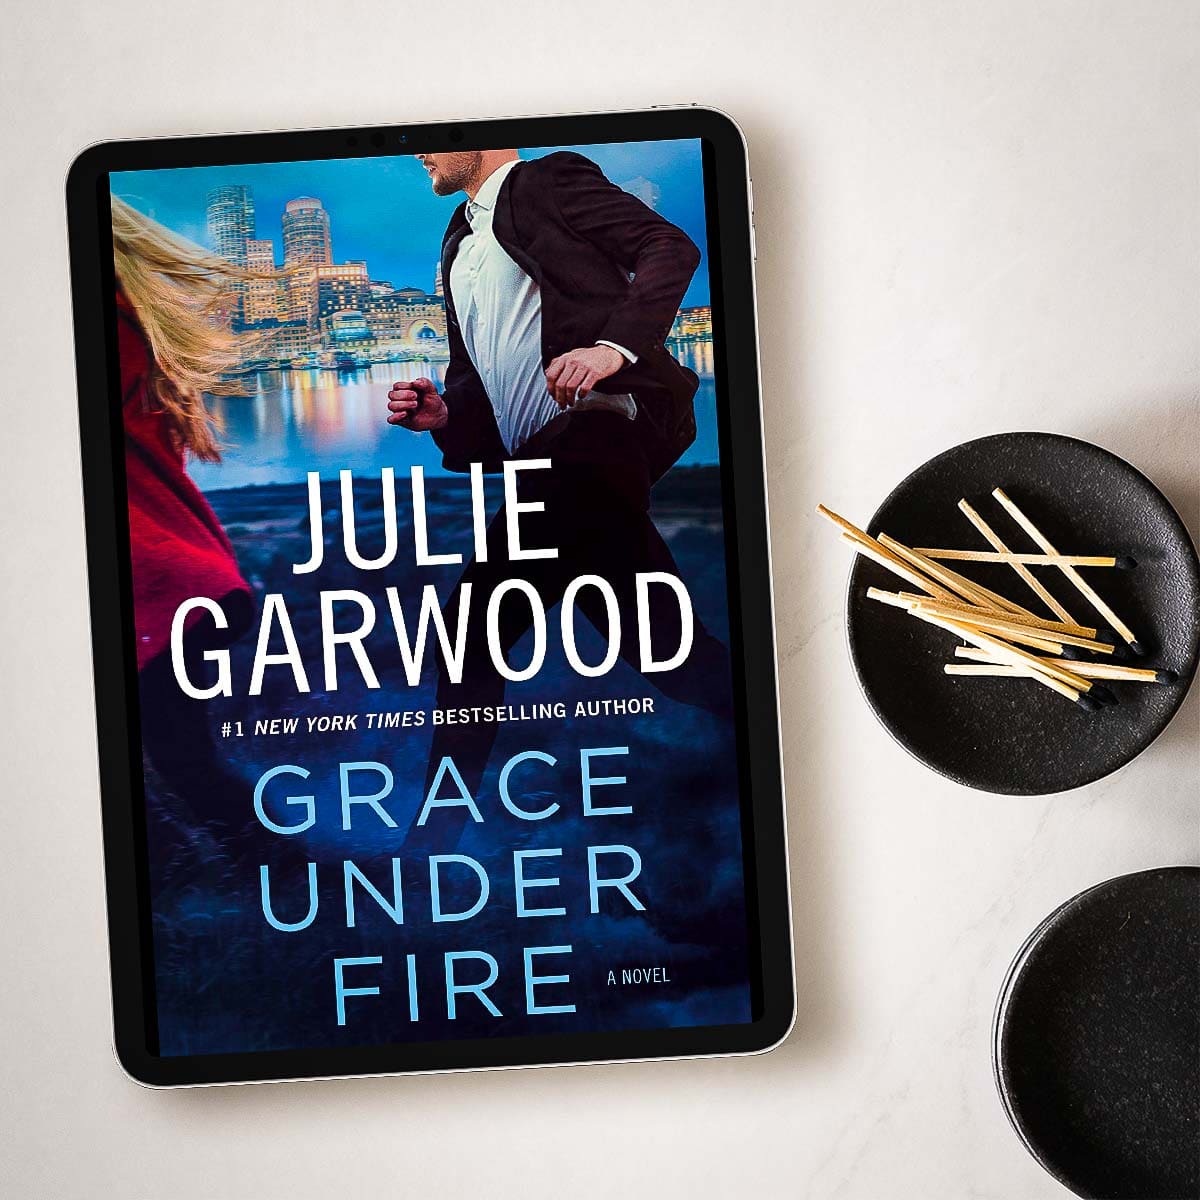 Read an Excerpt from Grace Under Fire by Julie Garwood!